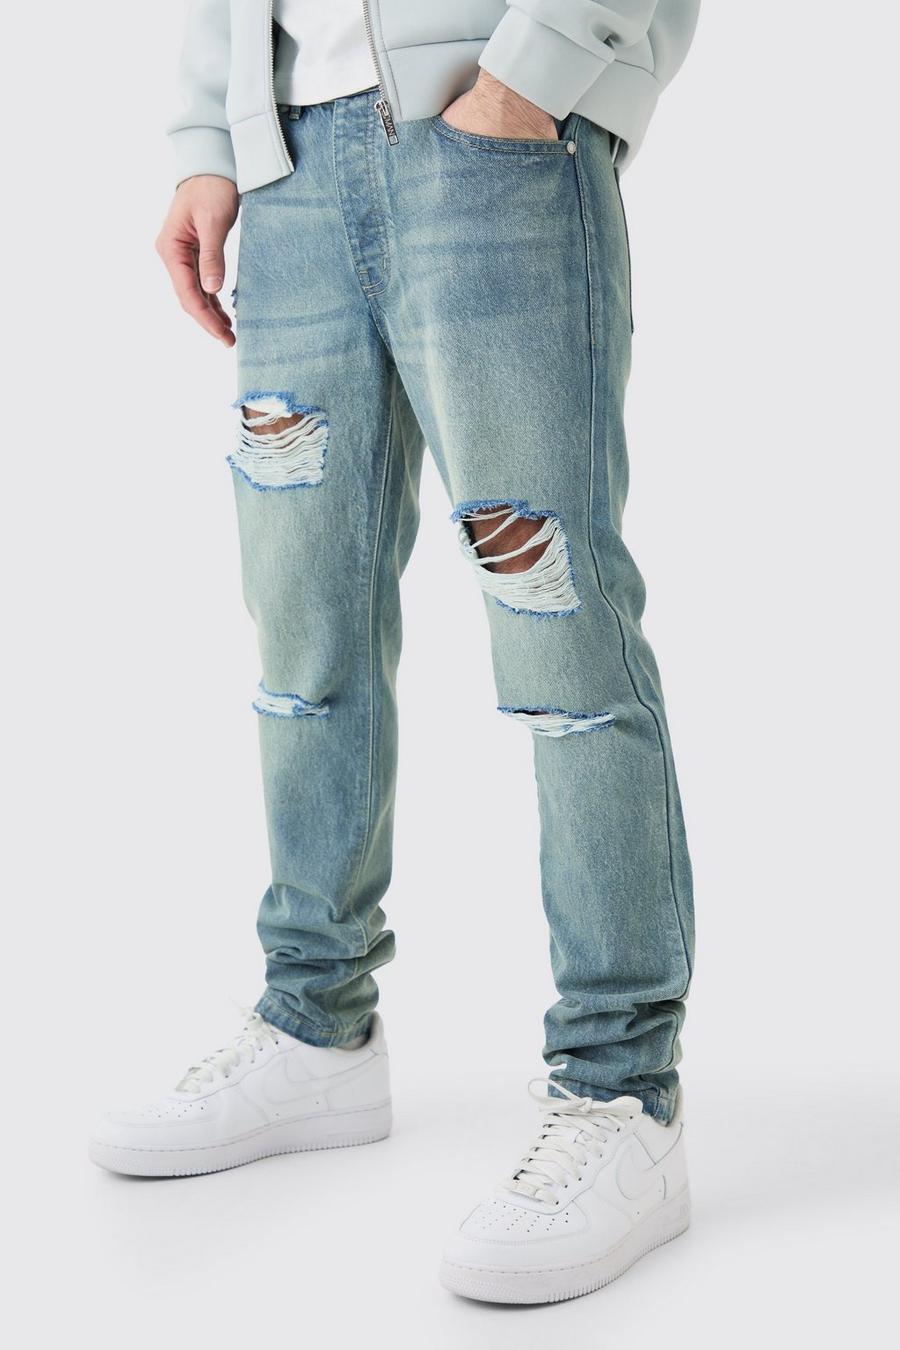 Jeans Slim Fit in denim rigido blu antico con strappi all over, Antique blue image number 1